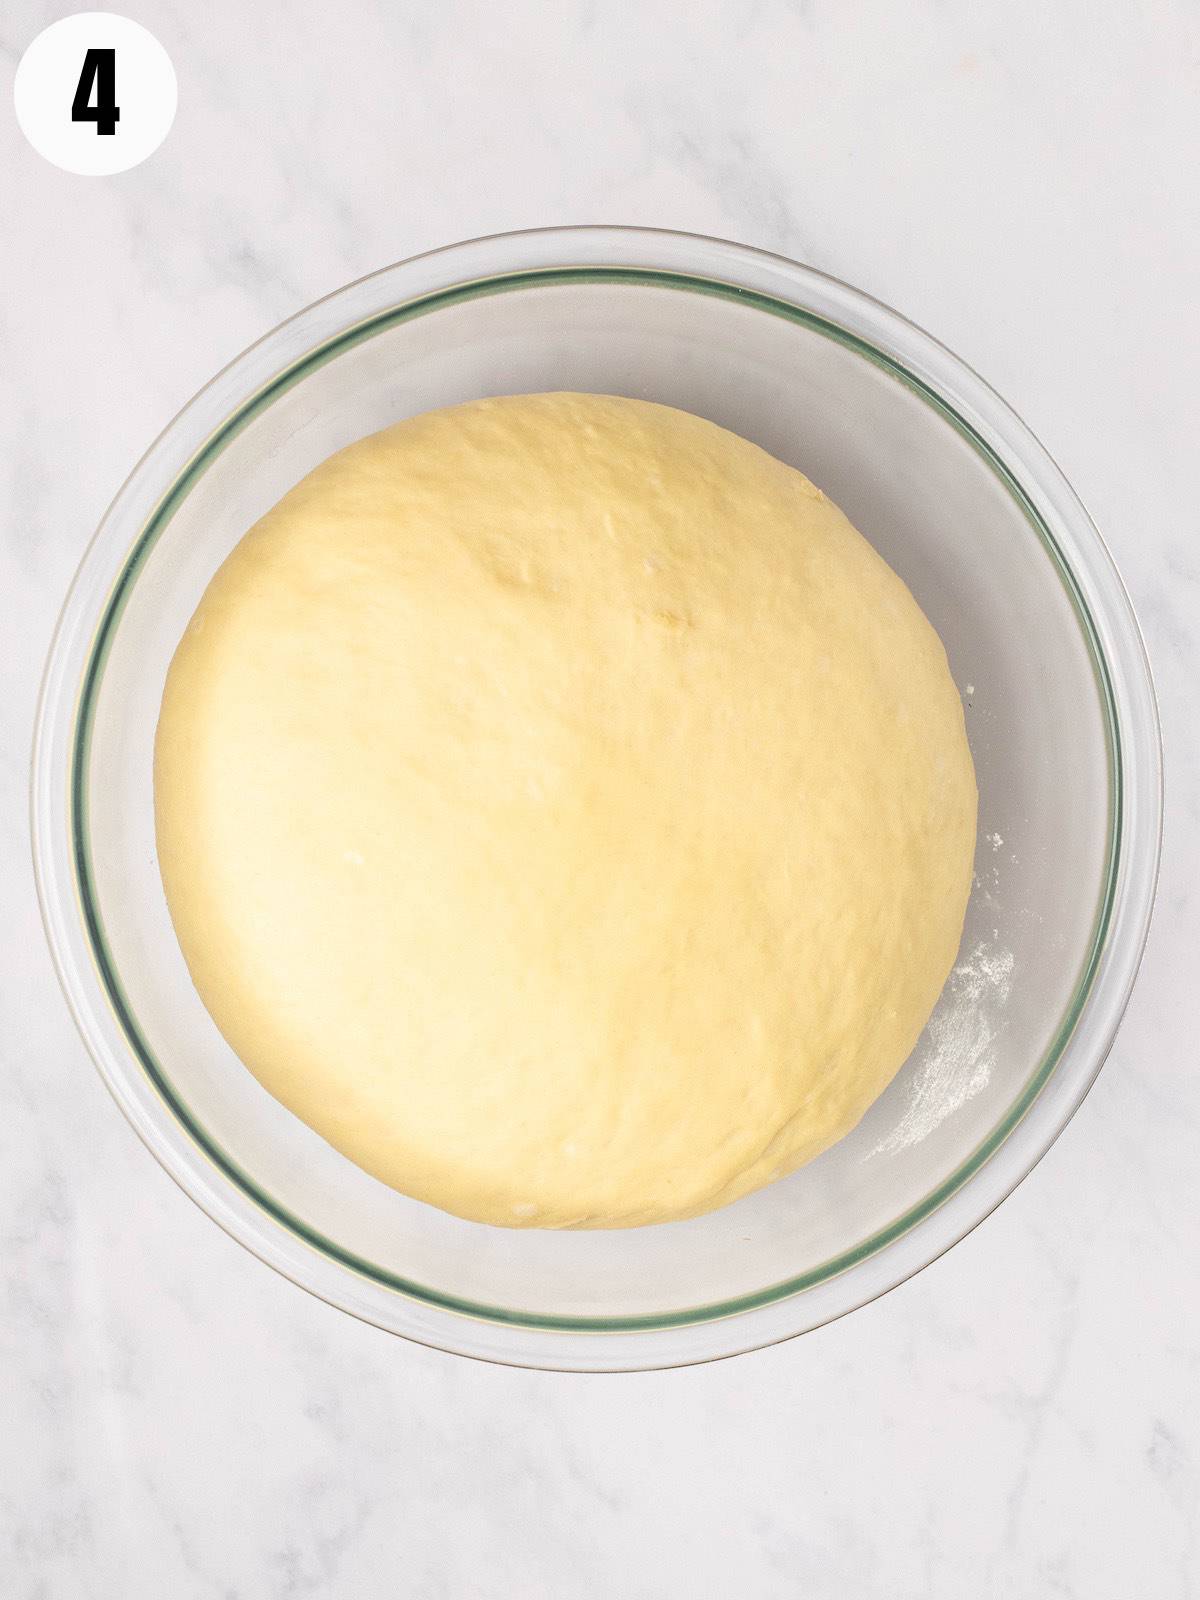 Challah dough rising in a bowl.